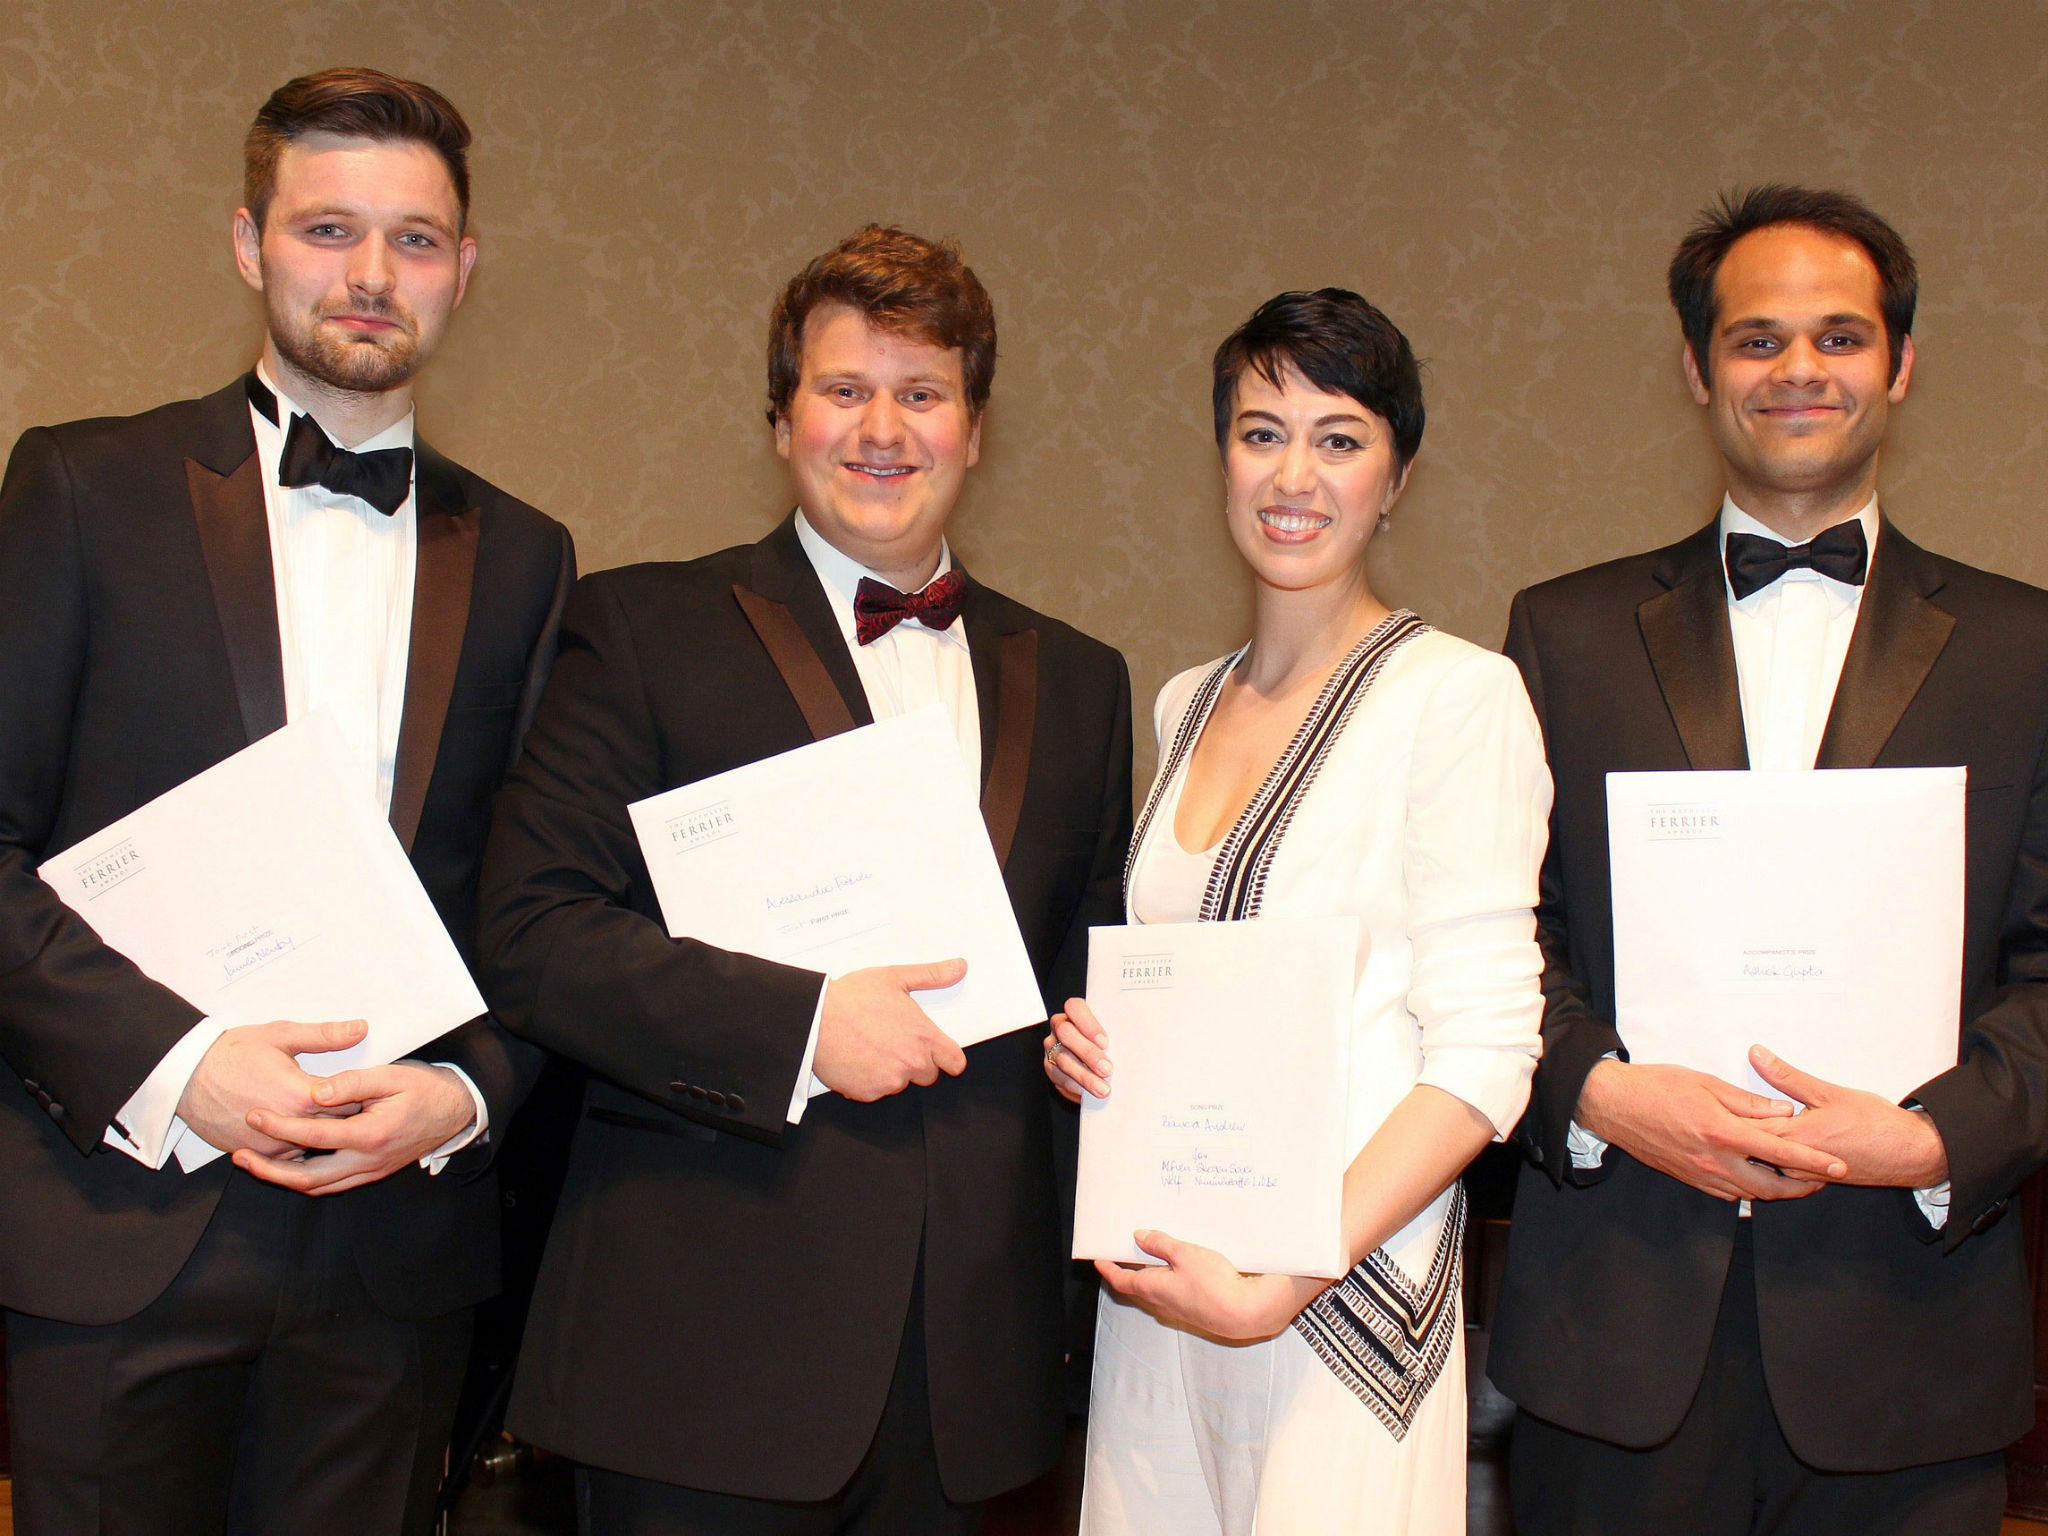 The four winners of the Kathleen Ferrier Awards: James Newby, Alessandro Fisher, Bianca Andrew, Ashok Gupta